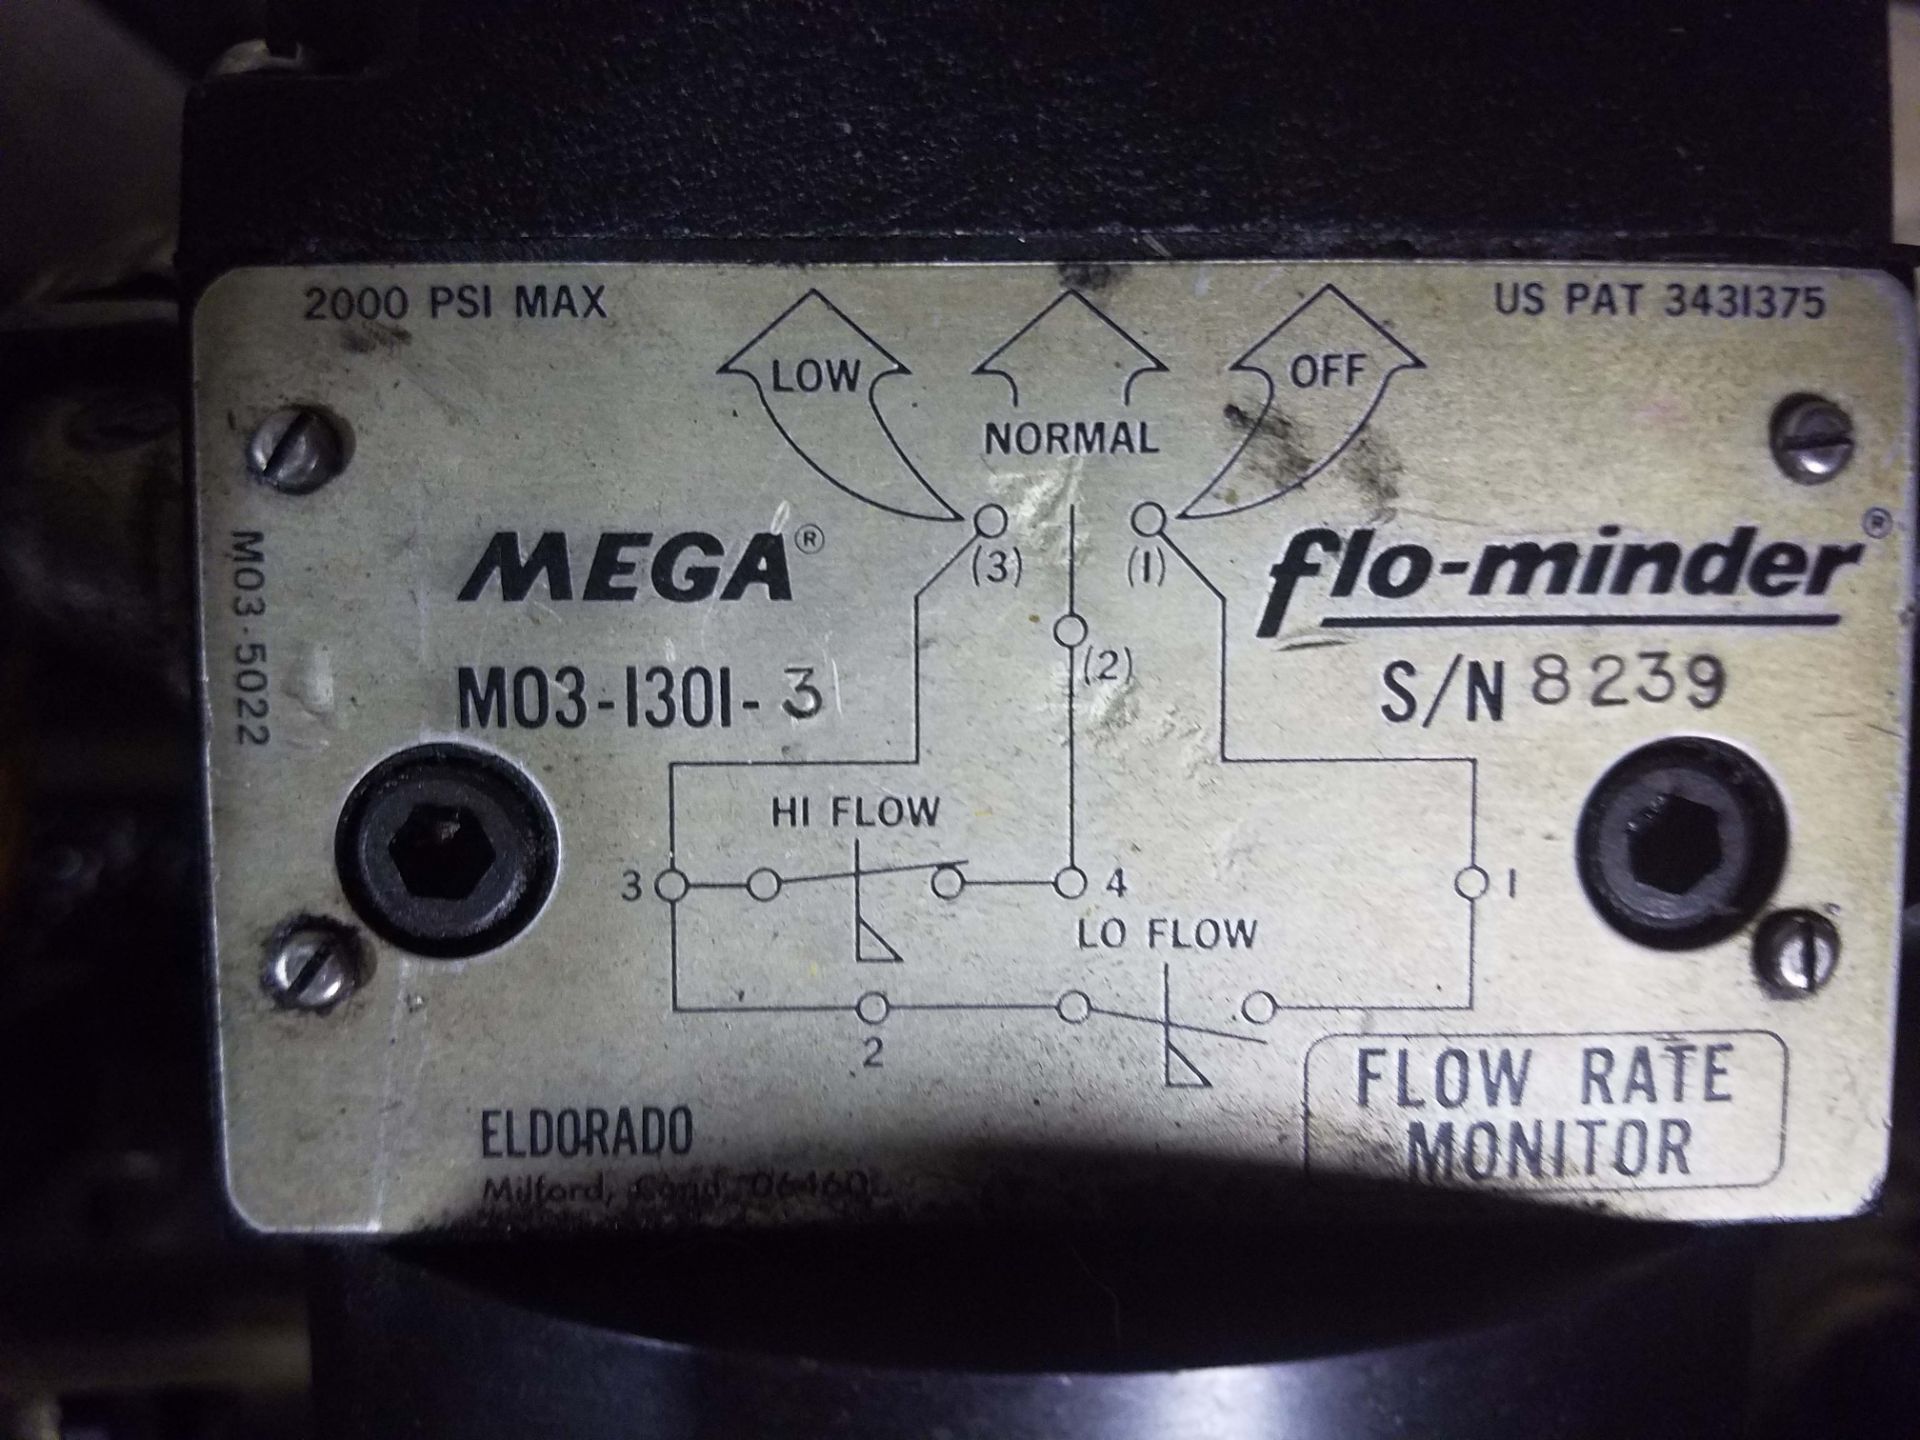 3/4 x 30 in Eldorado/Mega Model M75-1011 Precision Deep Hole Gun Drill, s/n 1475, 2 HP, 400-11,740 - Image 17 of 17